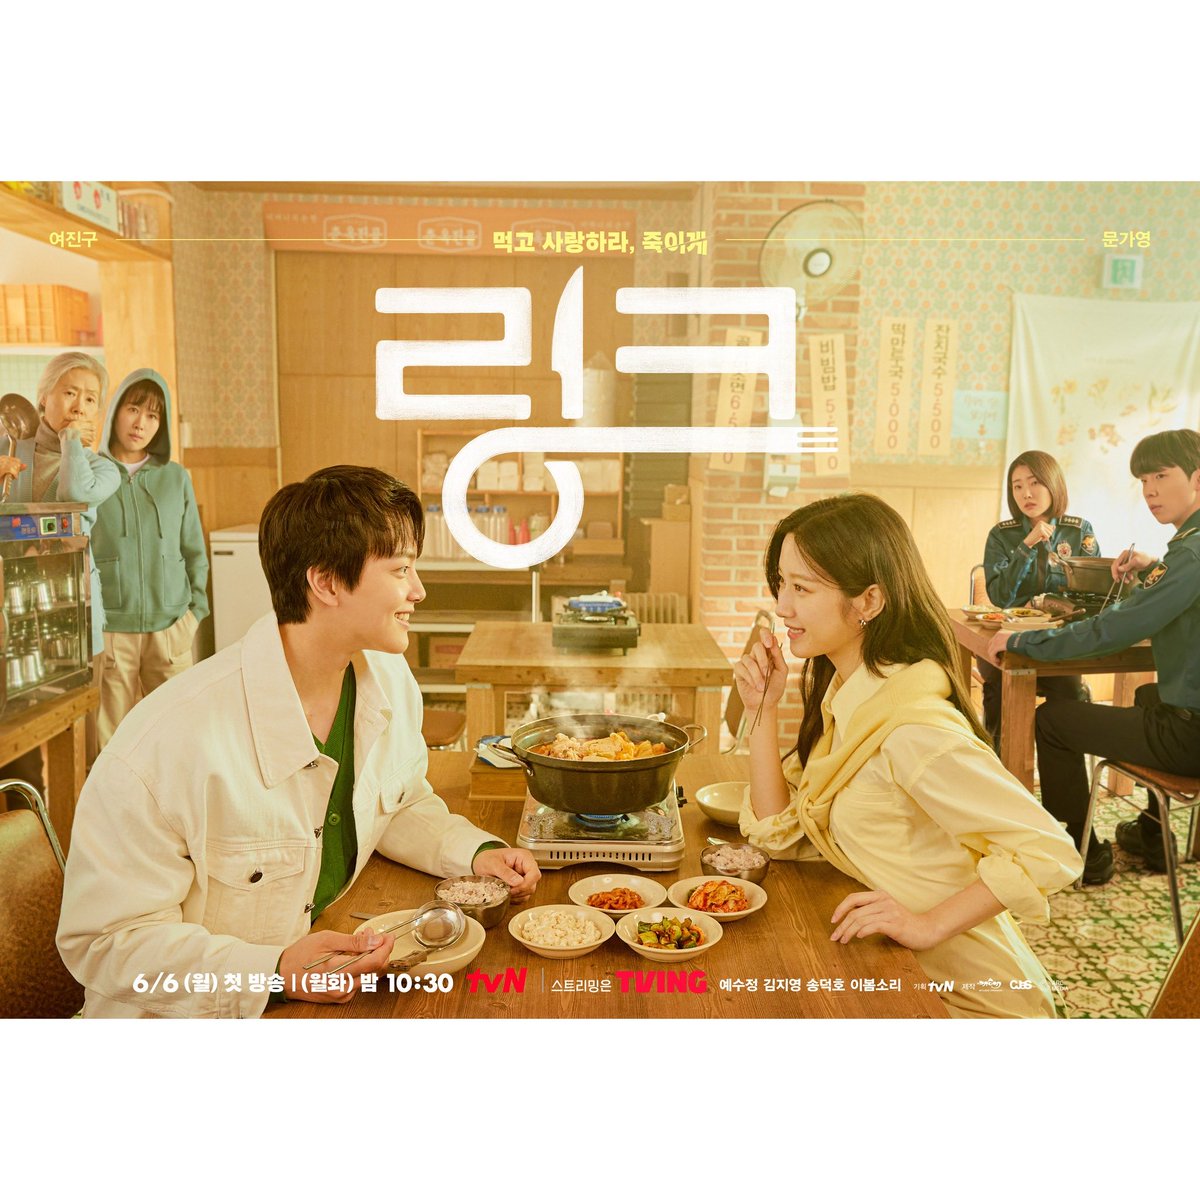 tvN drama <#Link> group poster, broadcast on June 6.

#YeoJinGoo #MunKaYoung #SongDeokHo #LeeBomSoRi #YeSooJung #KimJiYoung